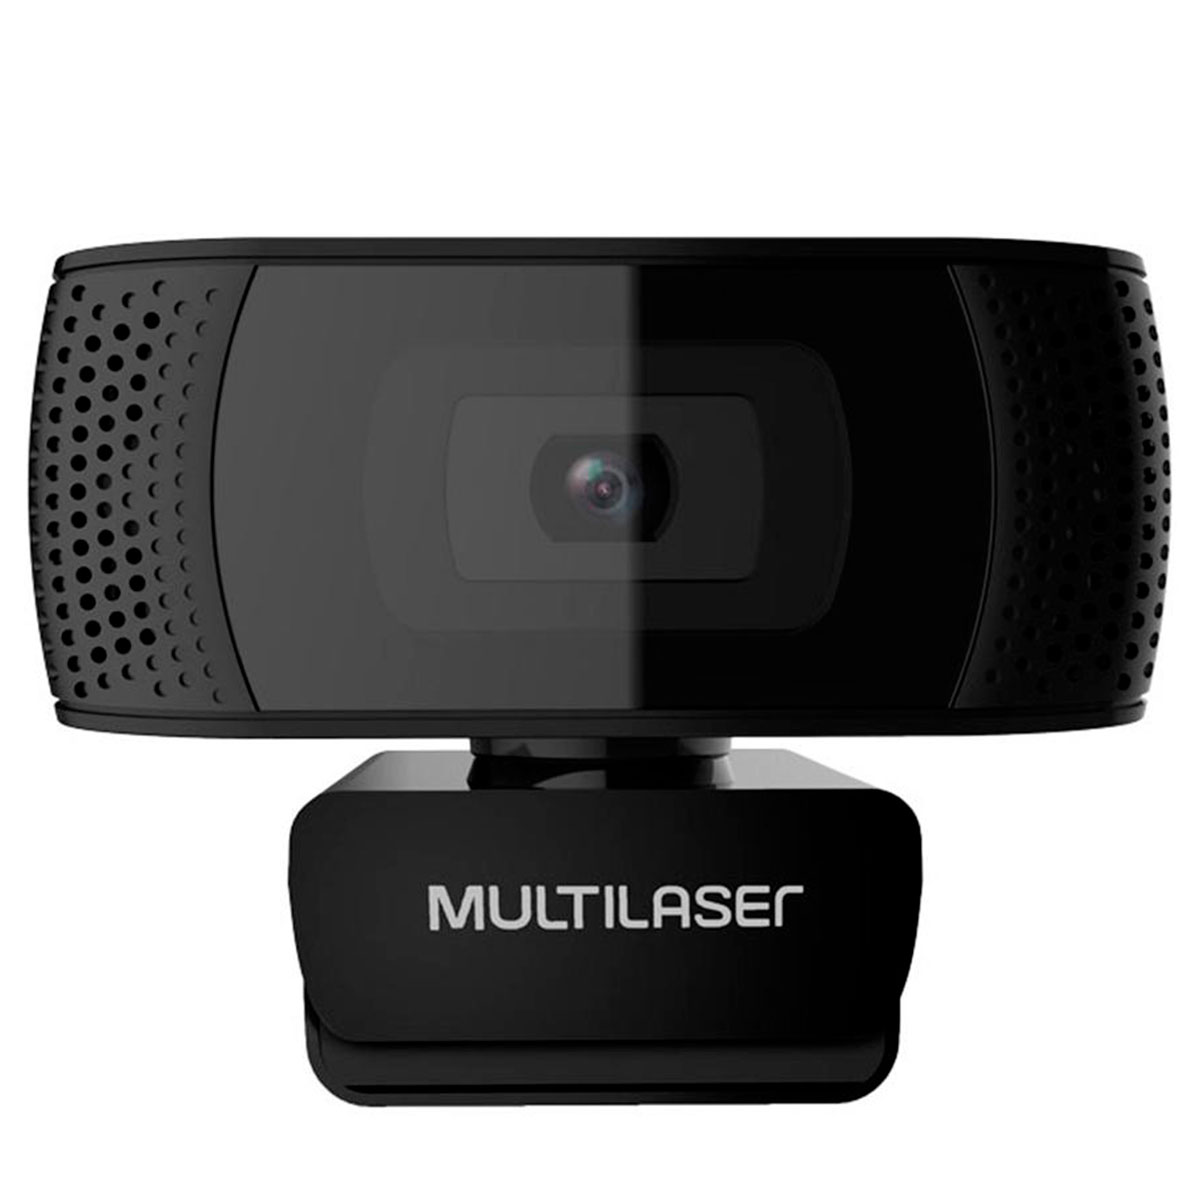 Web Câmera Multilaser WC050 - Vídeochamadas em Full HD 1080p - com Microfone